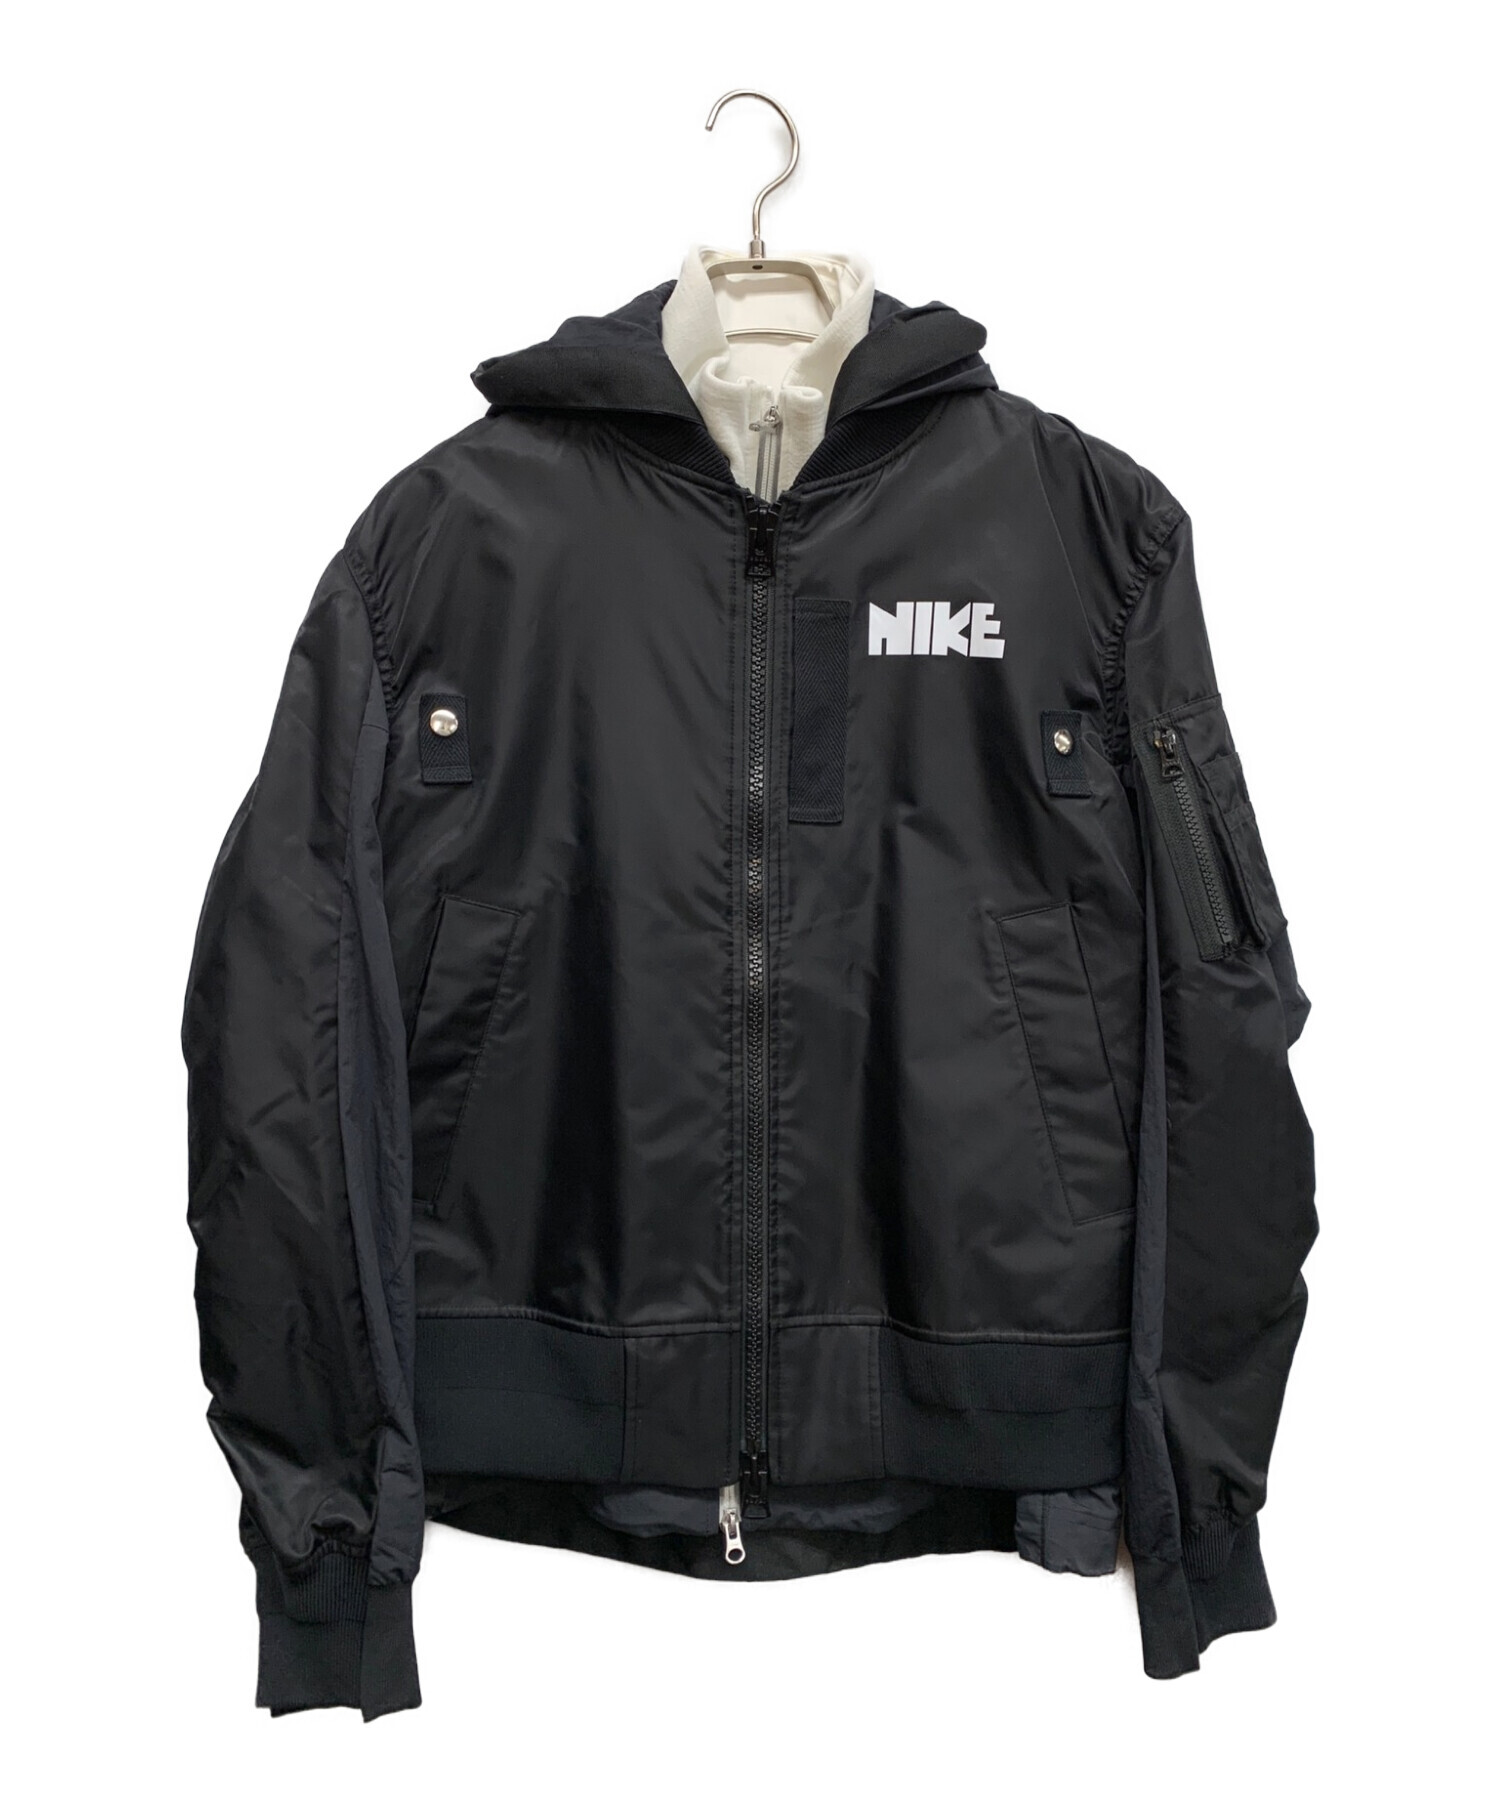 NIKE×sacai (ナイキ×サカイ) ウィンドランナージャケット ブラック サイズ:S